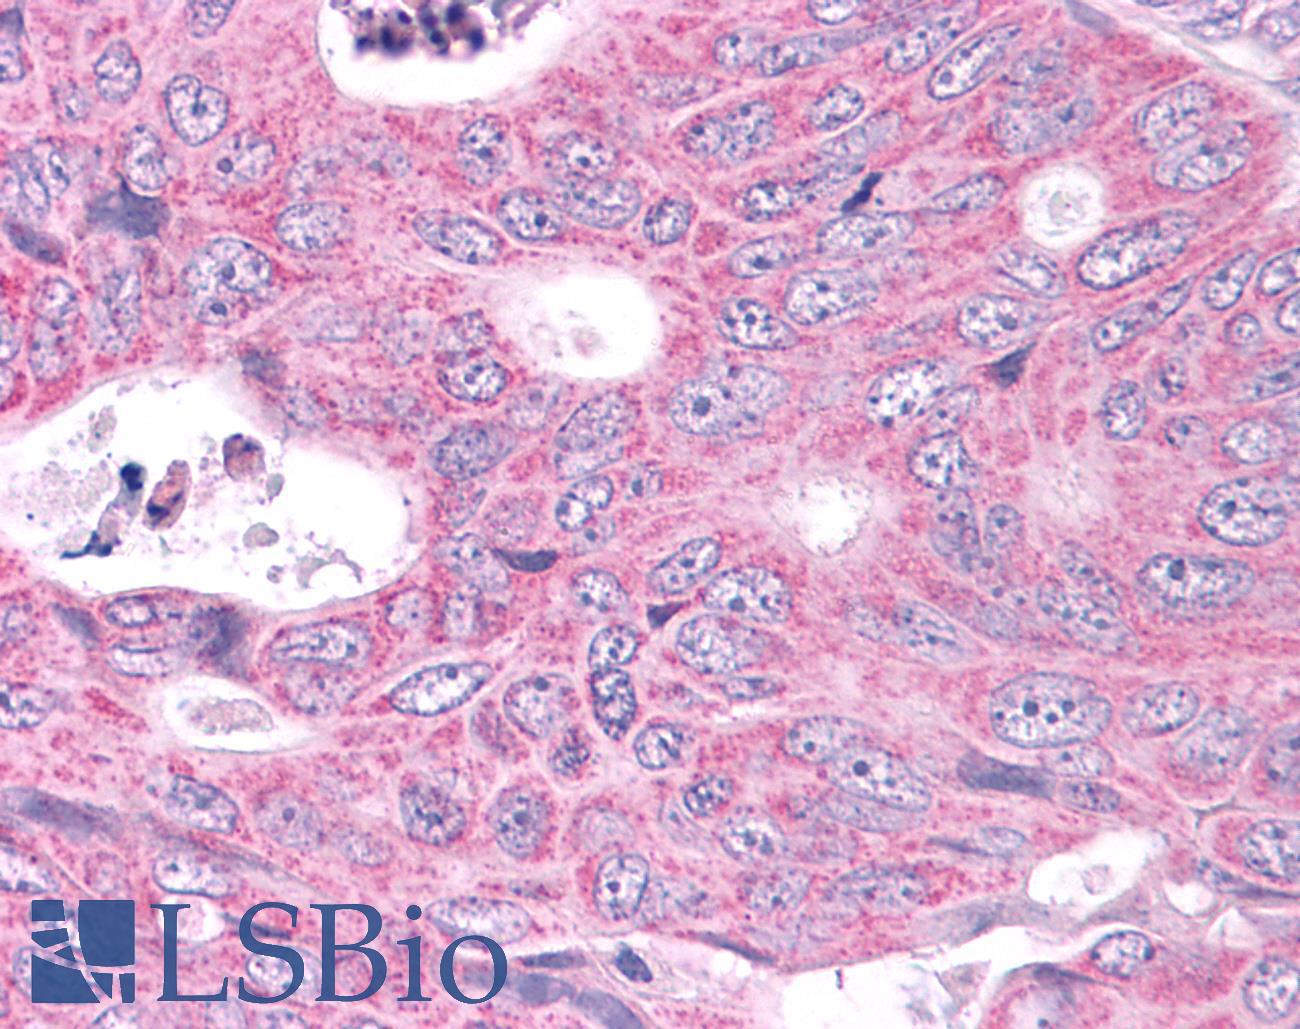 NEK6 Antibody - Colon, Carcinoma